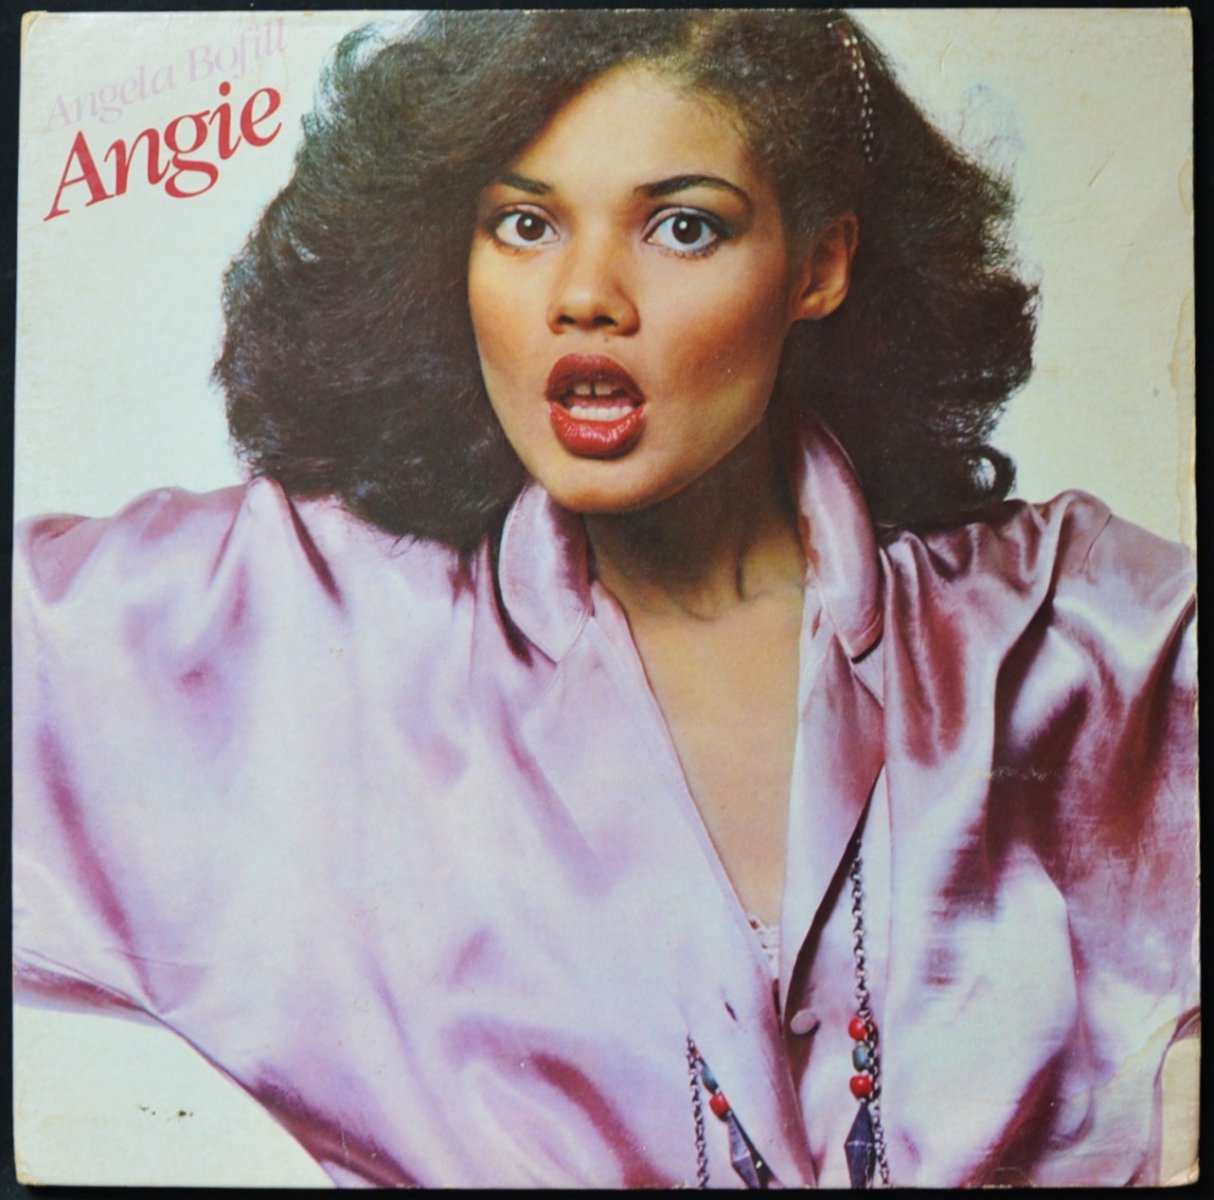 ANGELA BOFILL / ANGIE (LP)